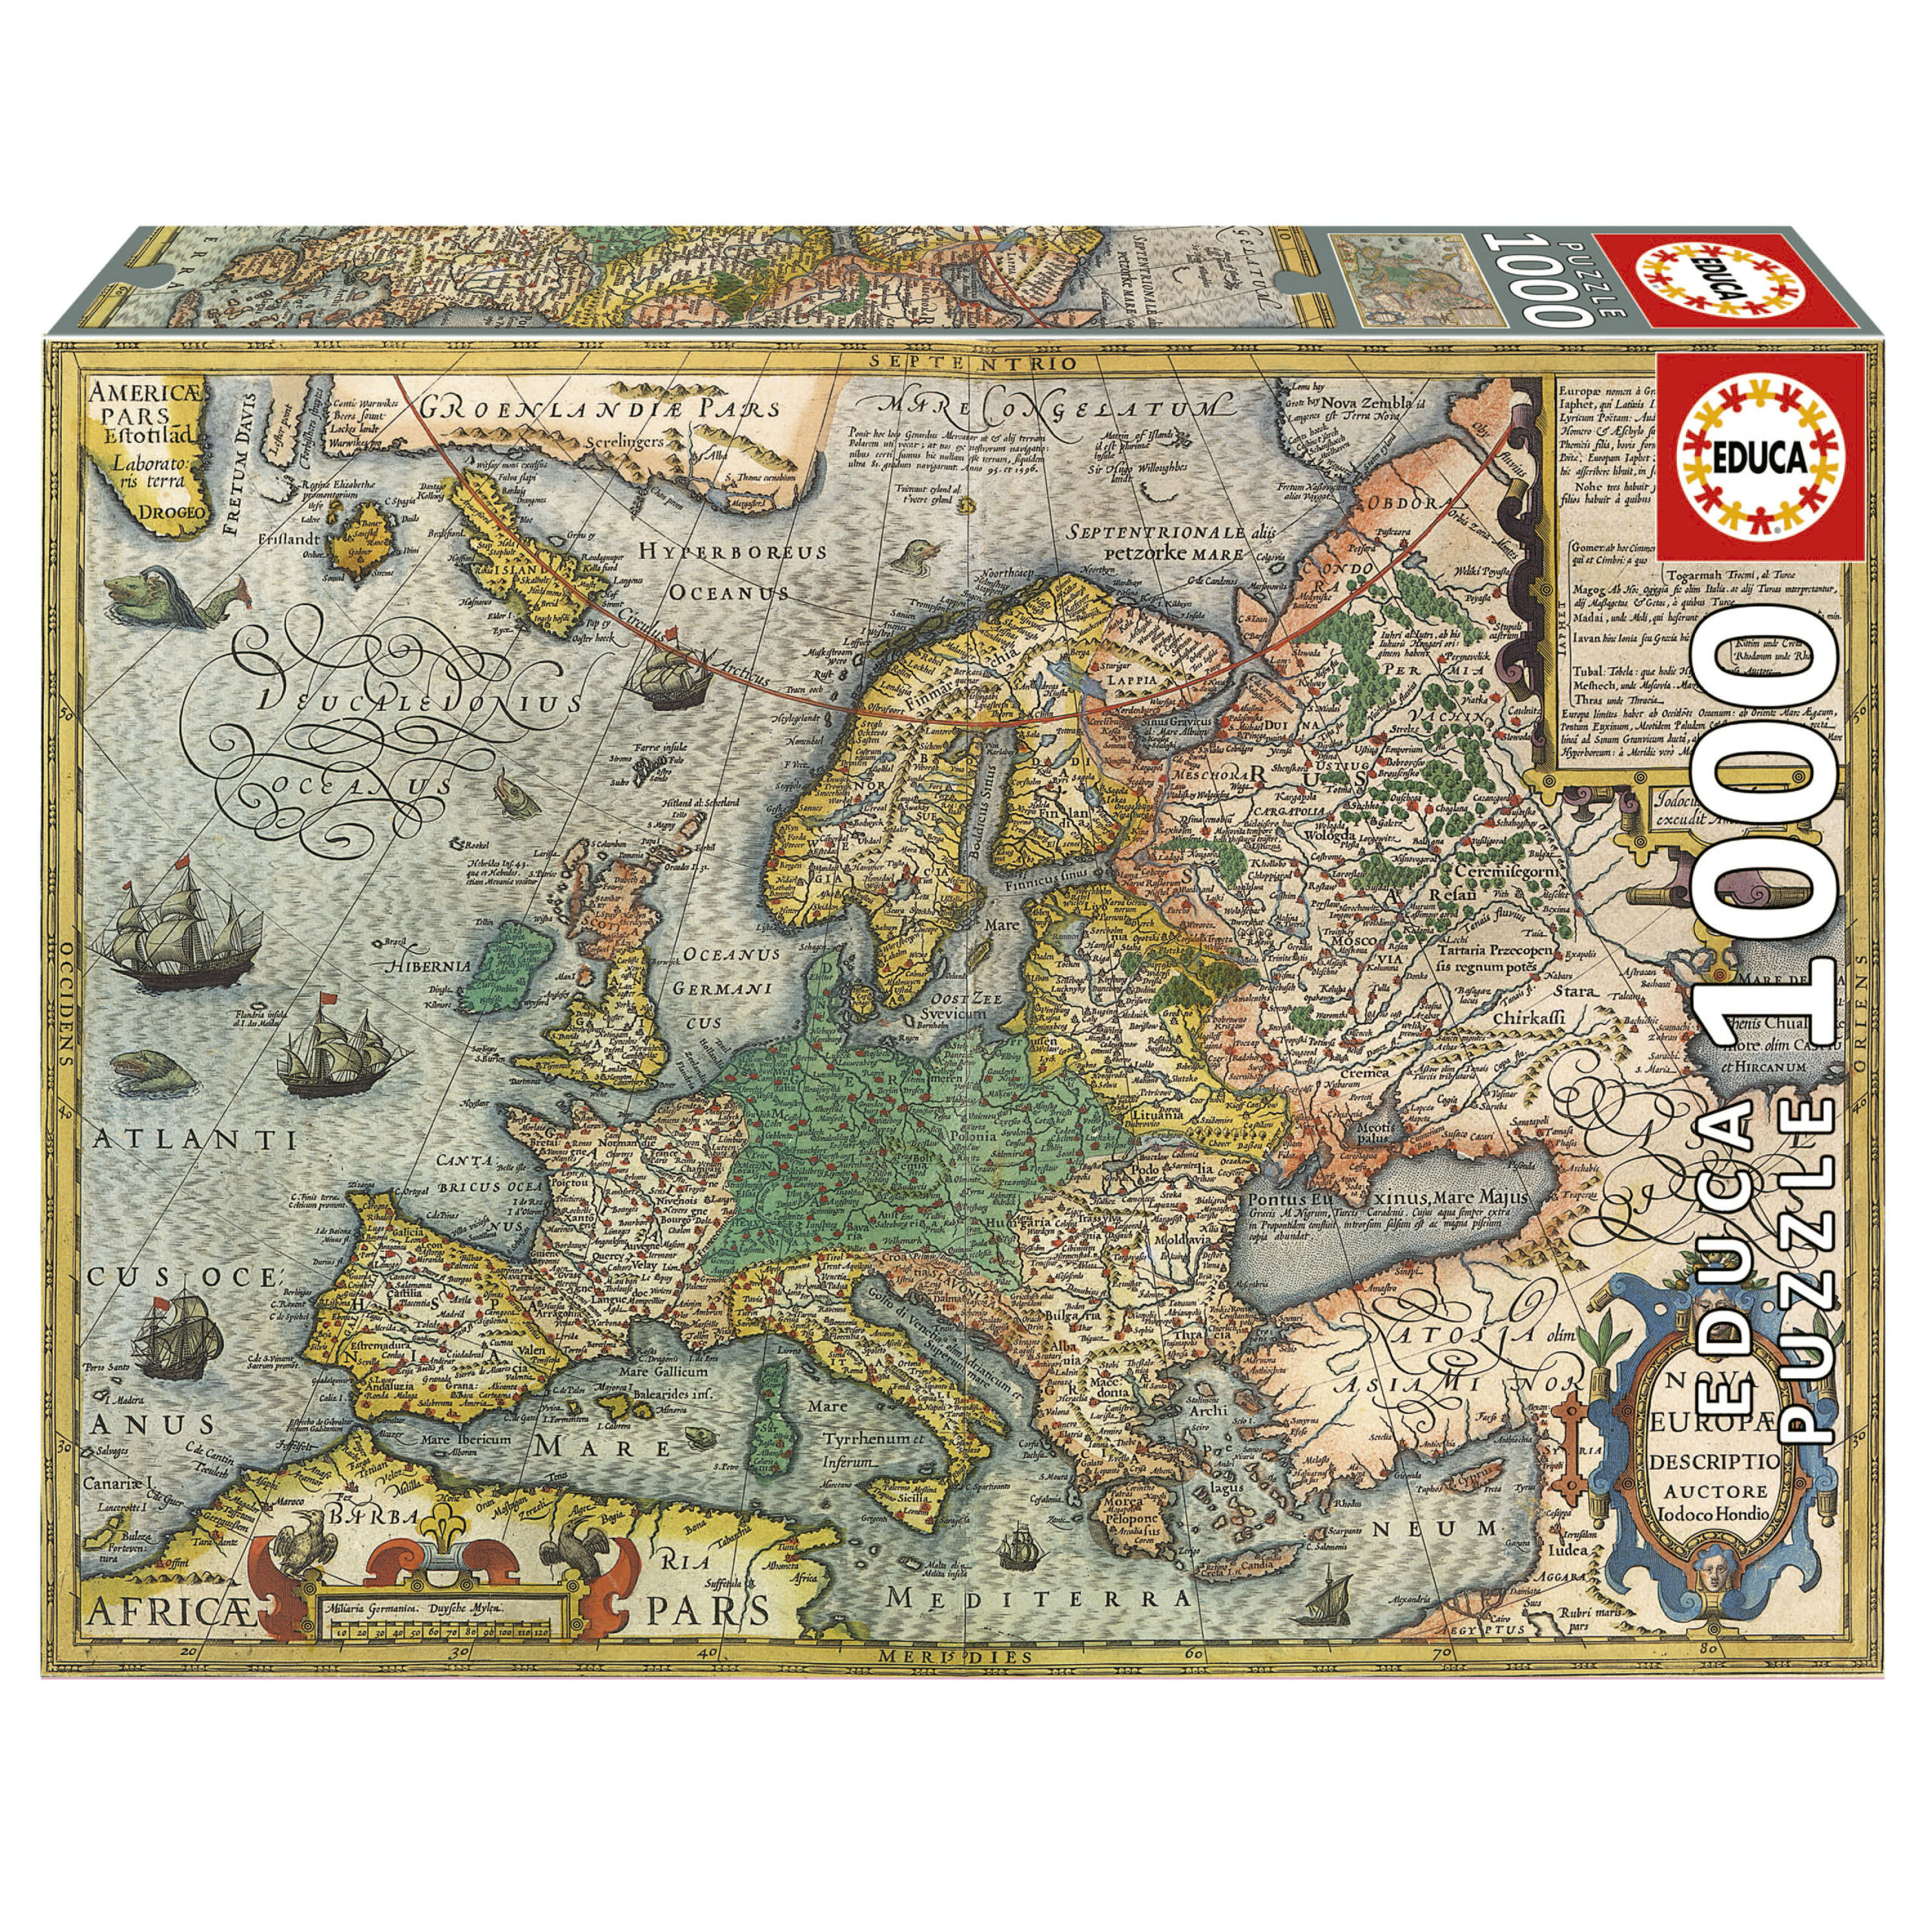 Educa borras 42000 Pieces Around The World Puzzle Multicolor